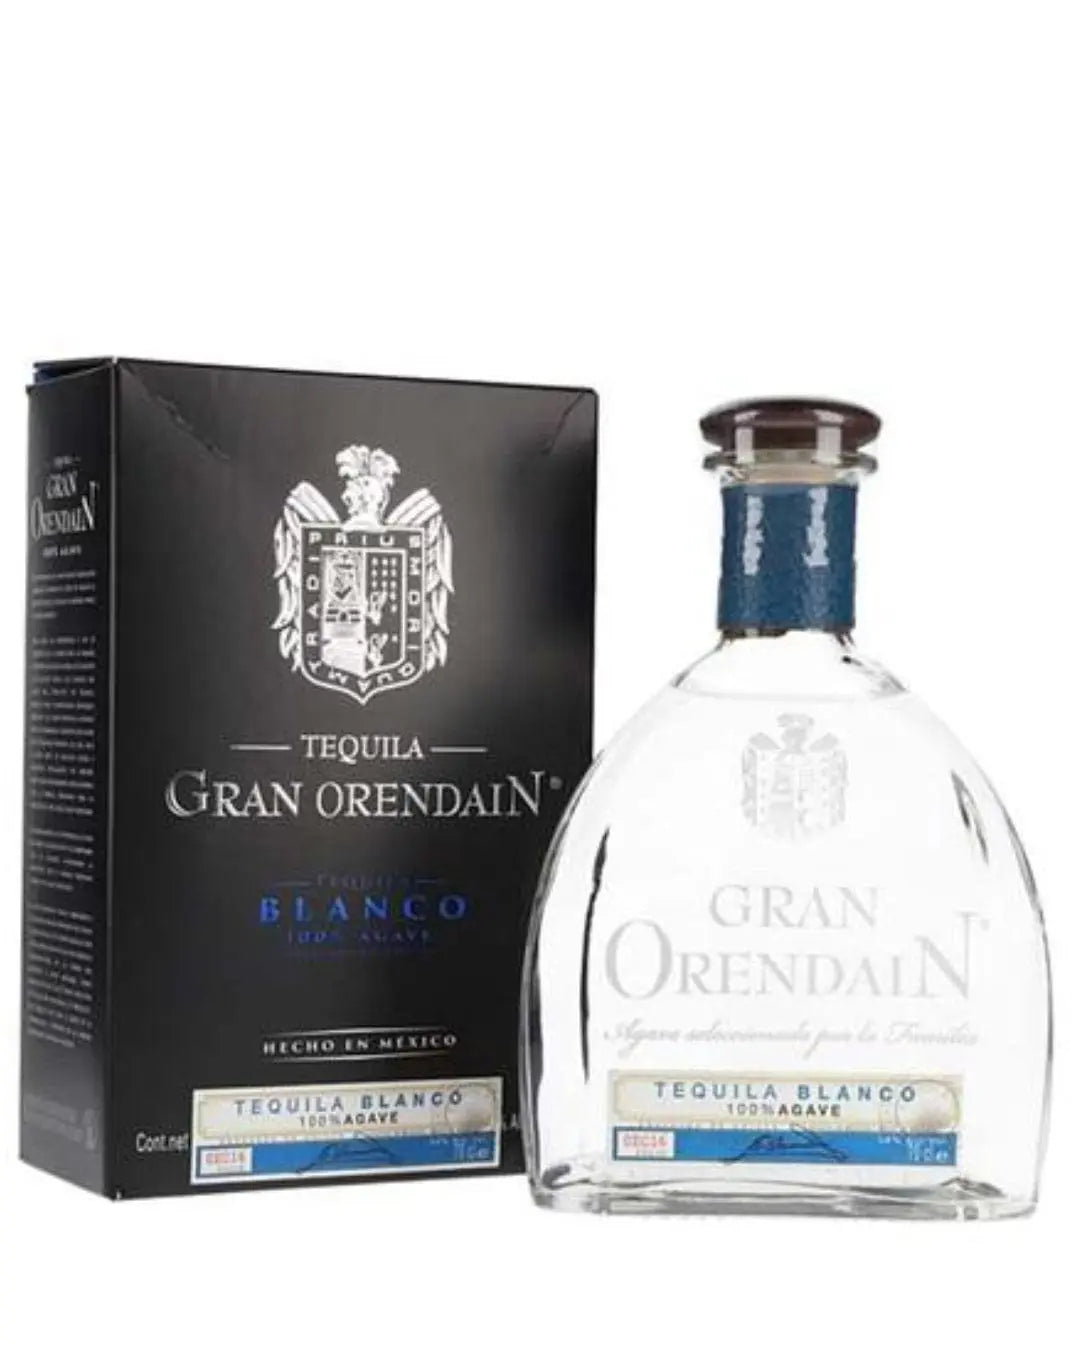 Gran Orendain Blanco Tequila, 70 cl Tequila & Mezcal